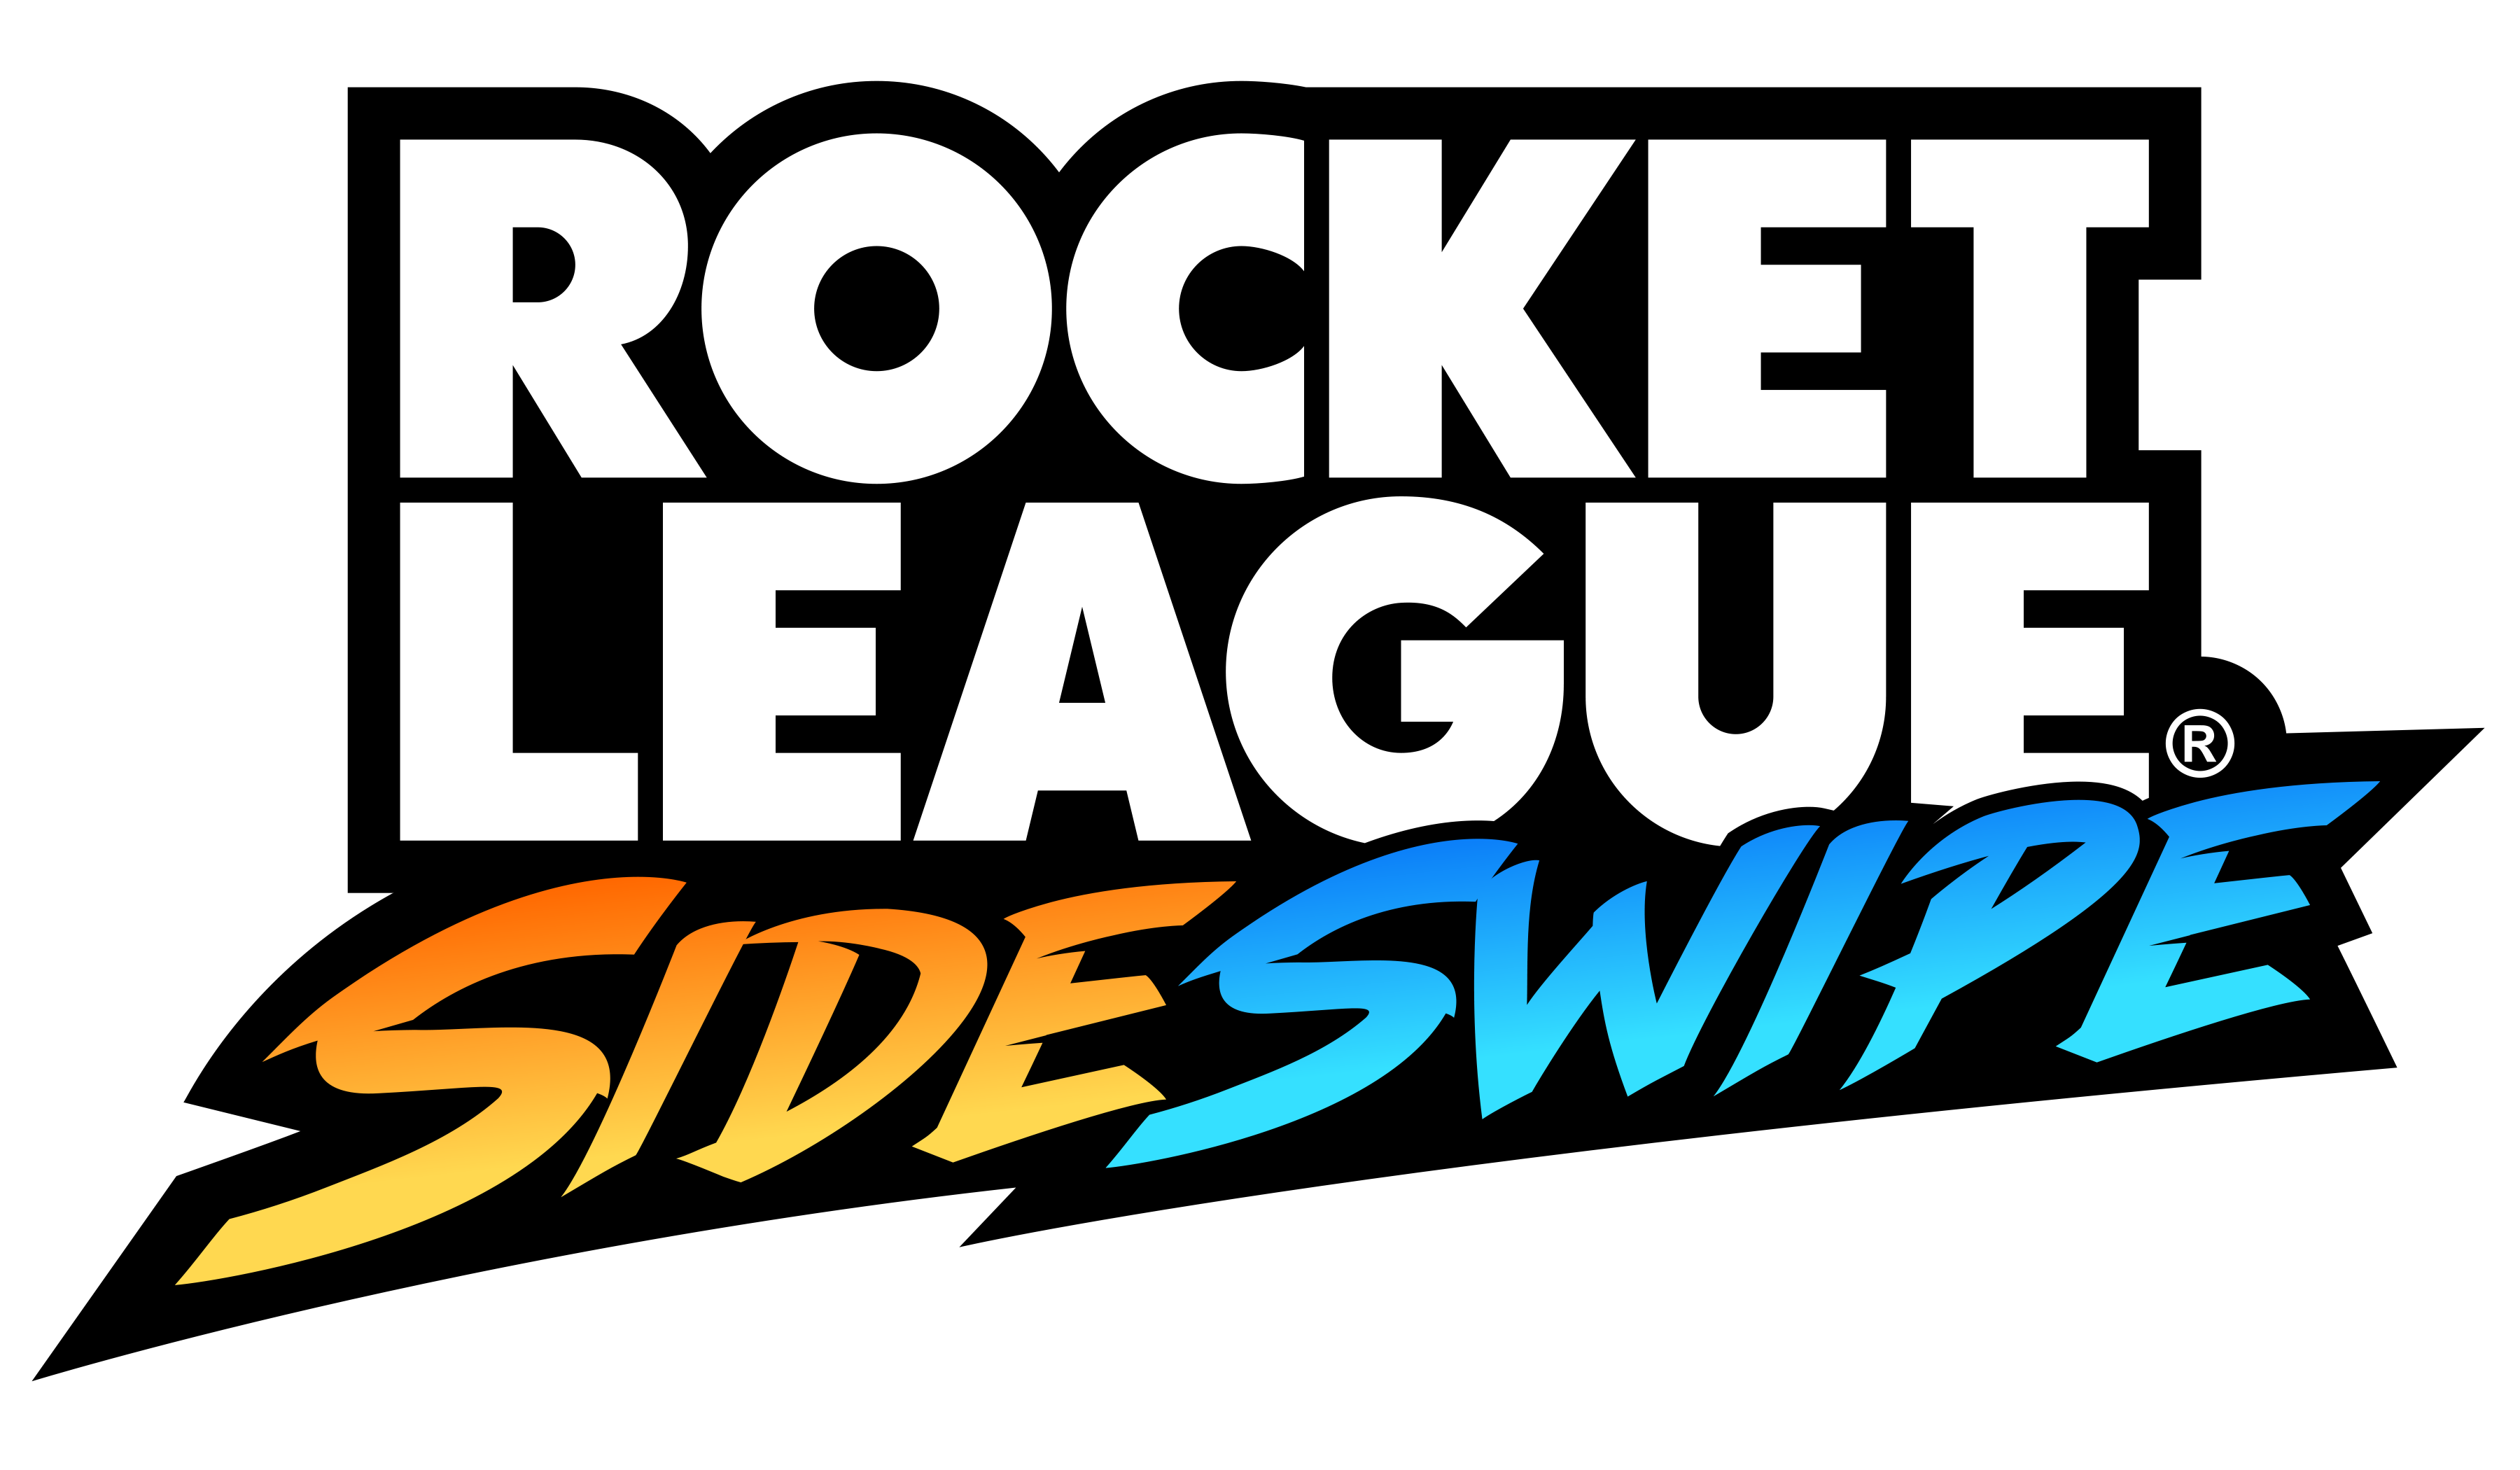 Rocket League Community Tournament Guidelines Update